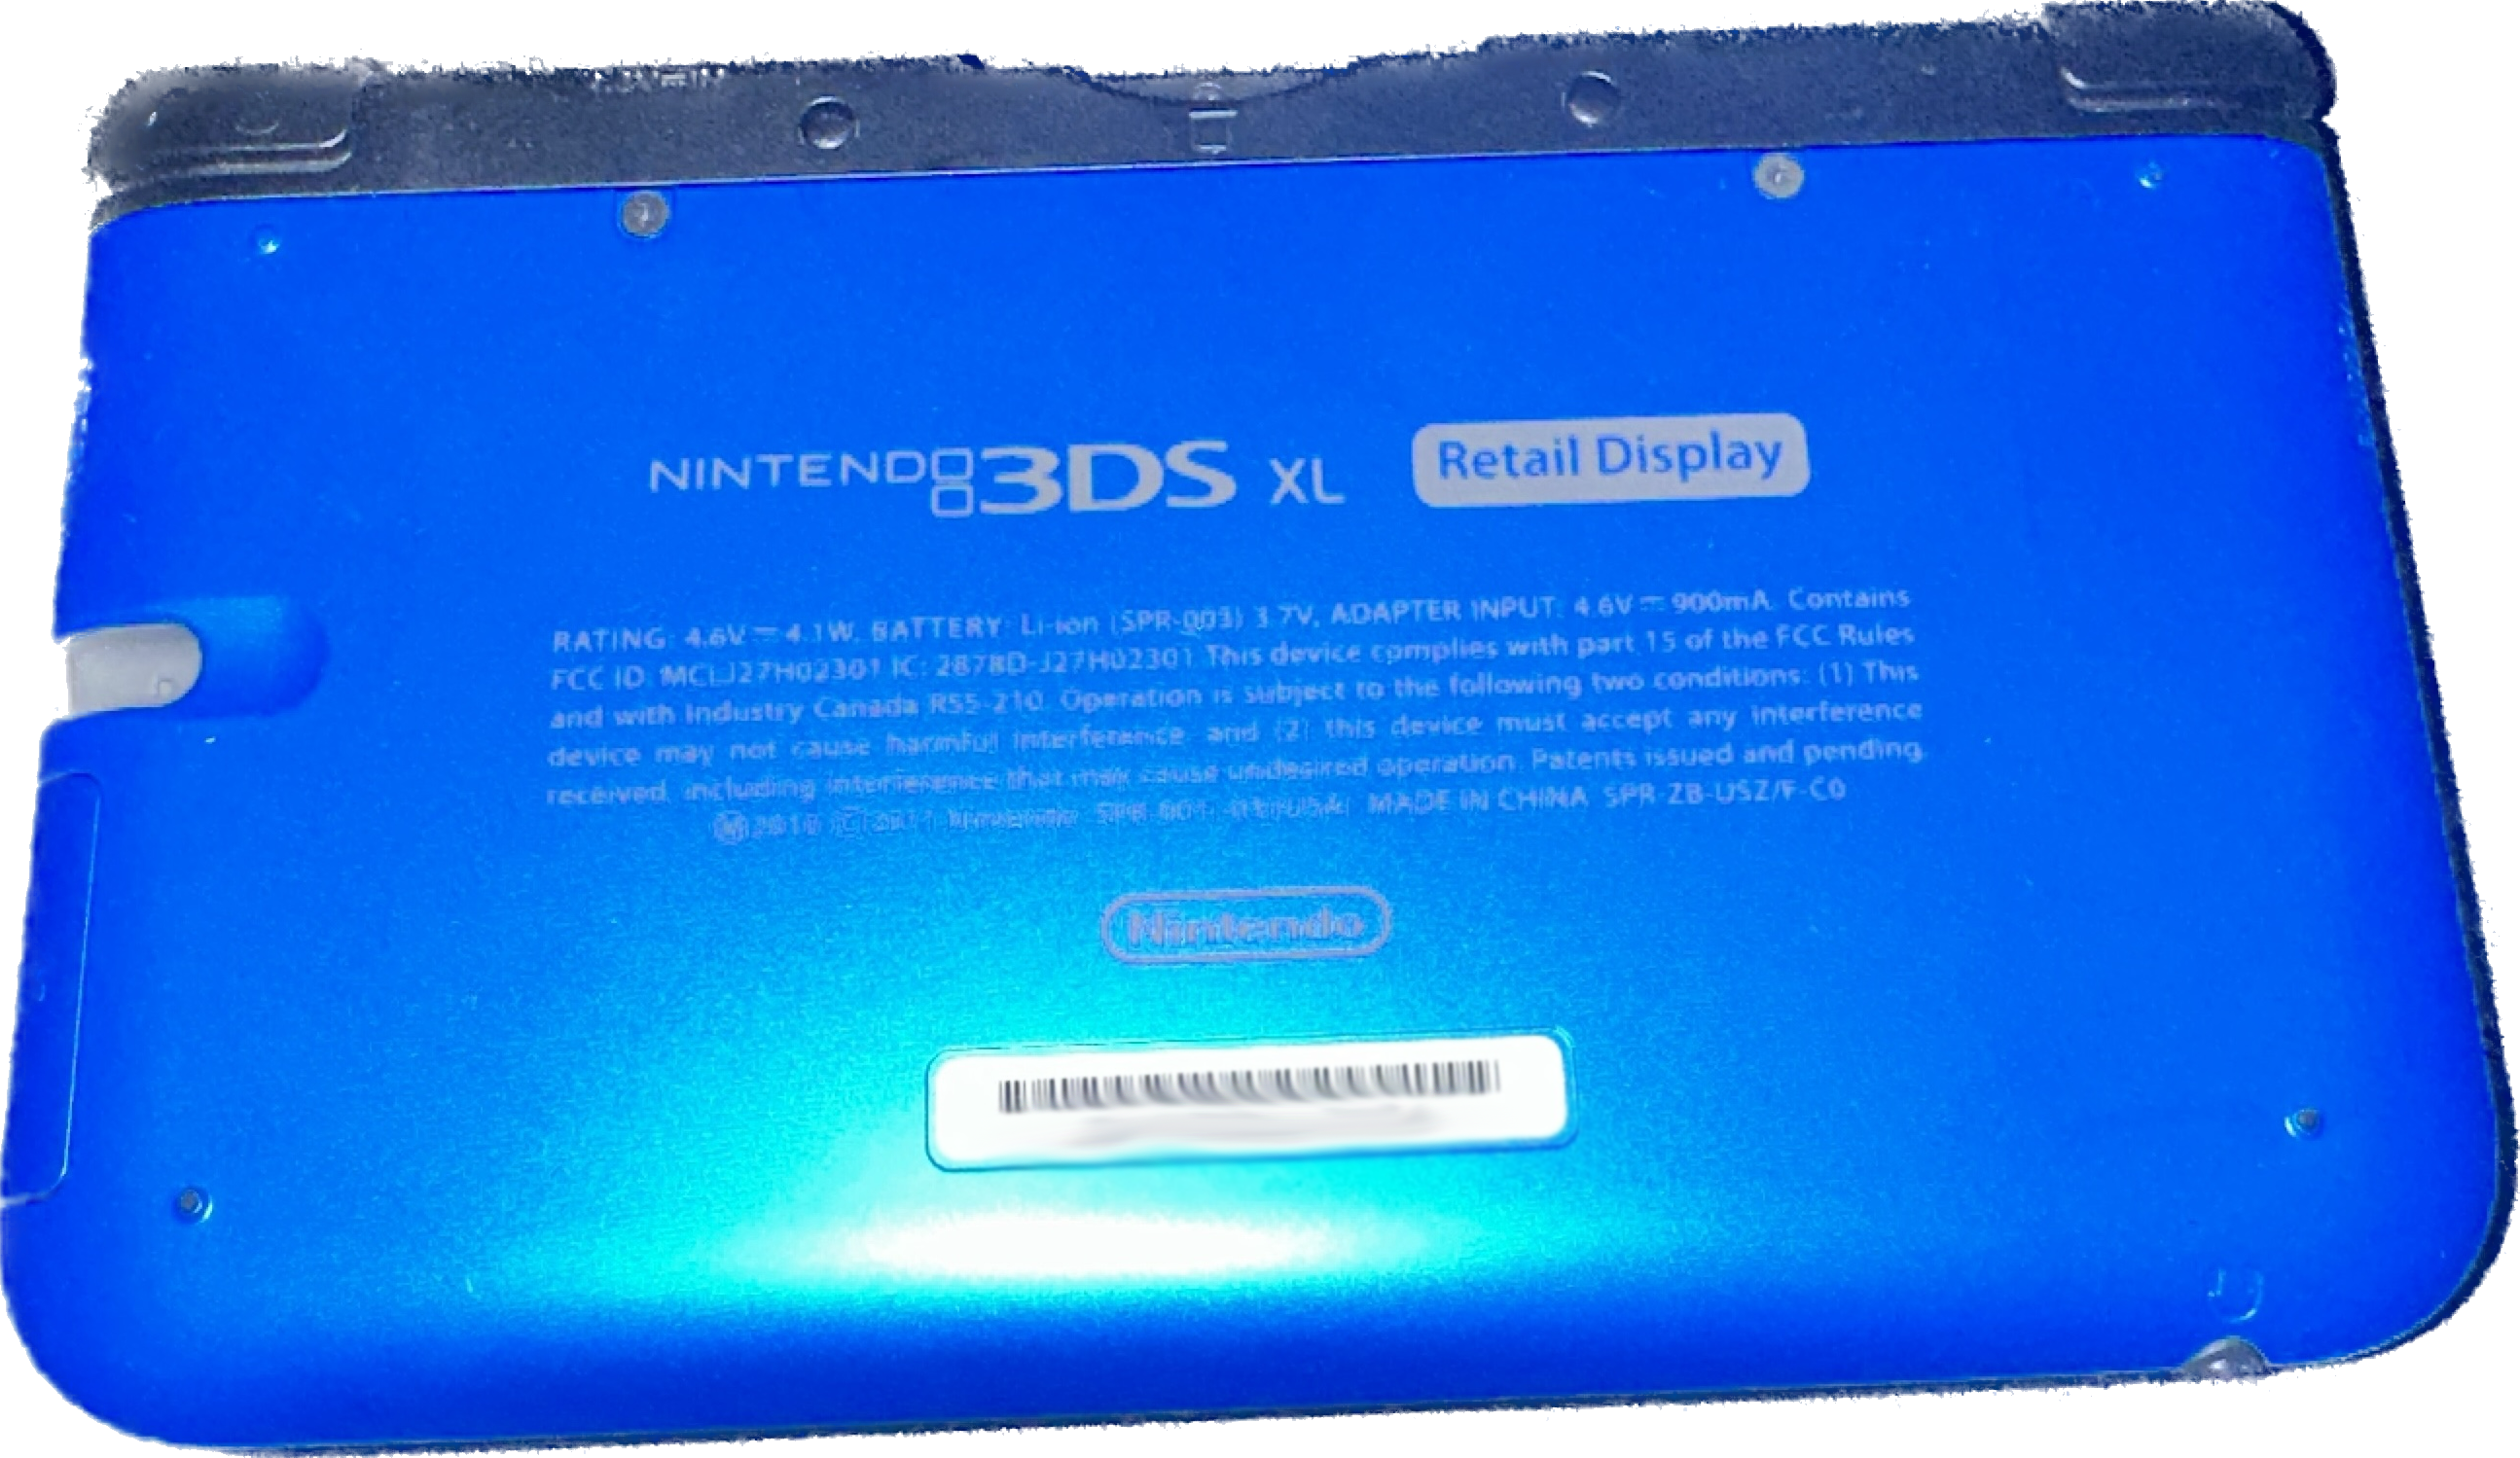  Nintendo 3DS XL Metallic Blue Retail Display